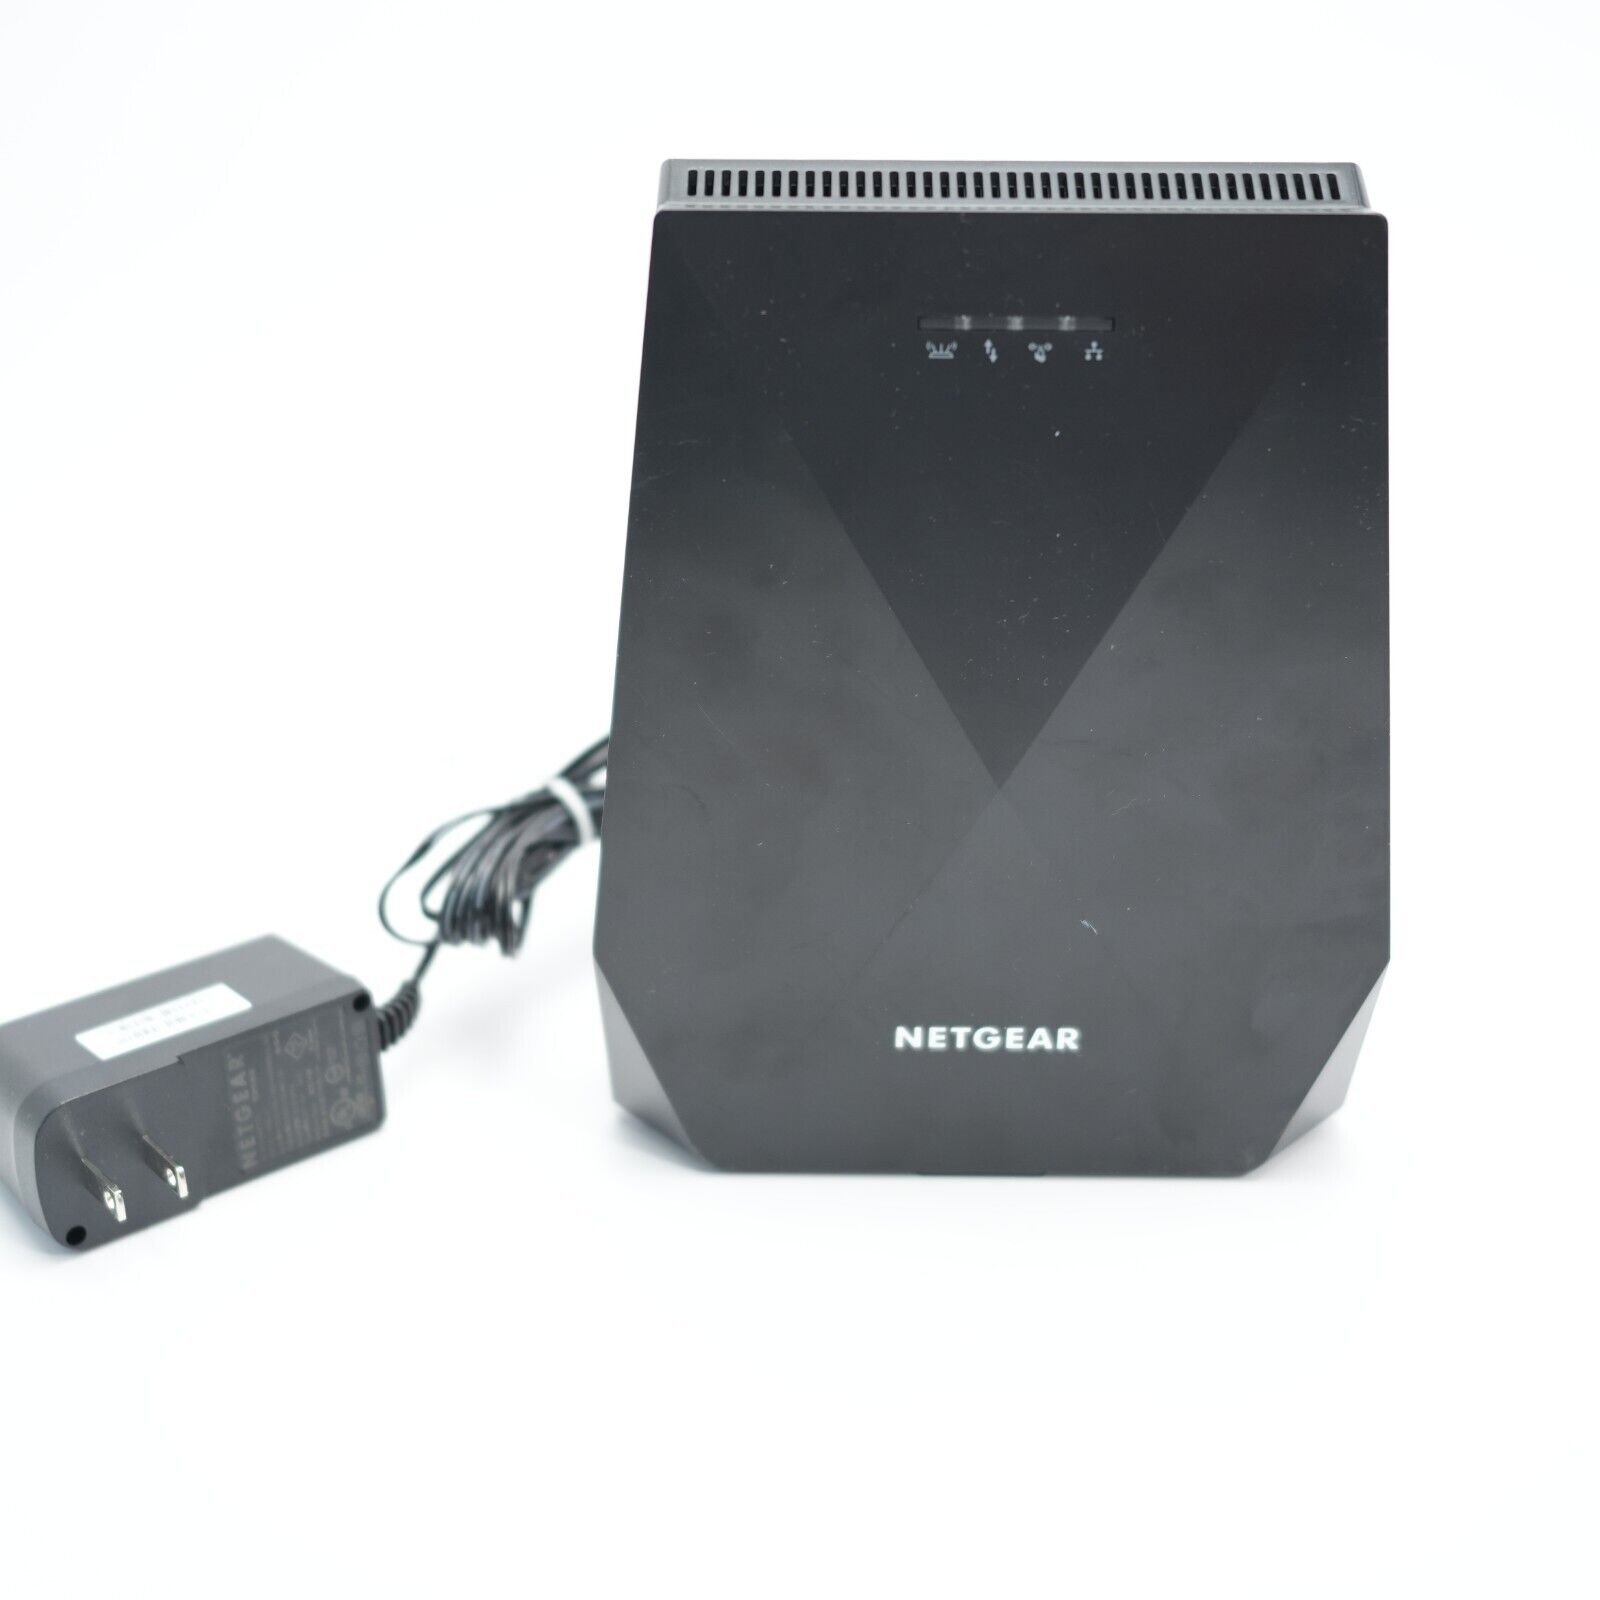 NETGEAR Nighthawk X6 EX7700 AC2200 Tri-band WiFi Mesh Extender Router